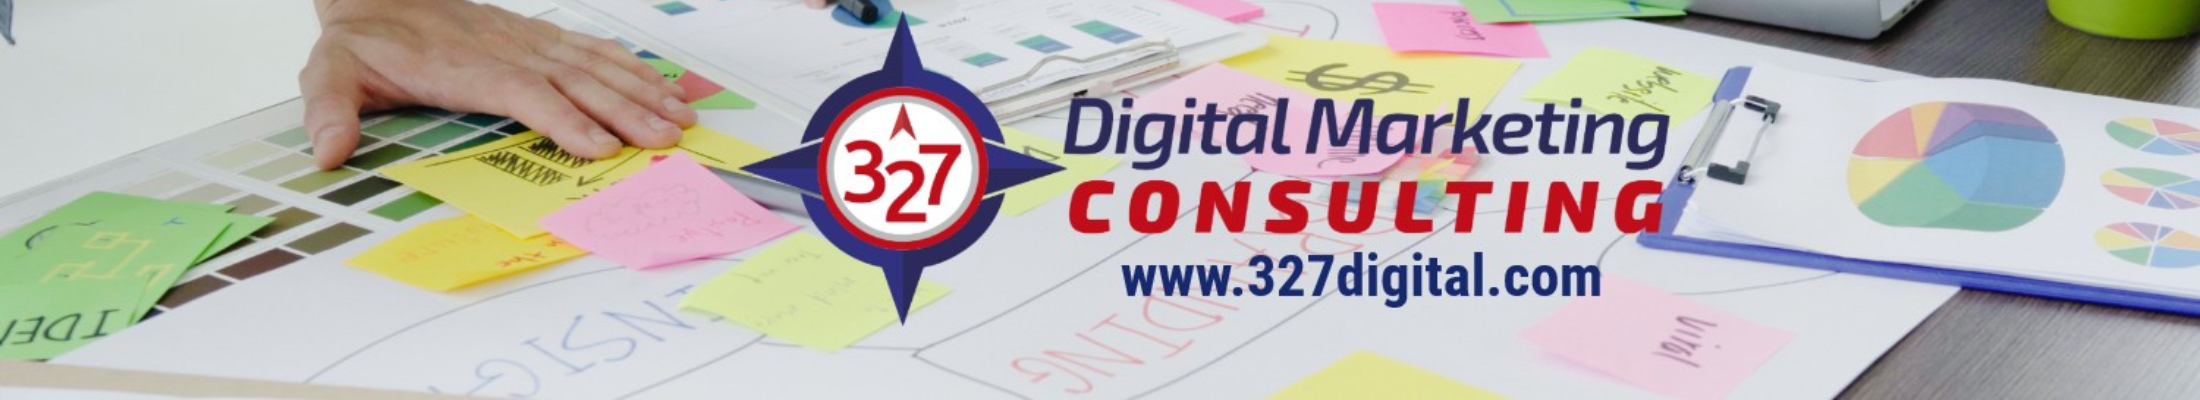 327 Digital Marketing